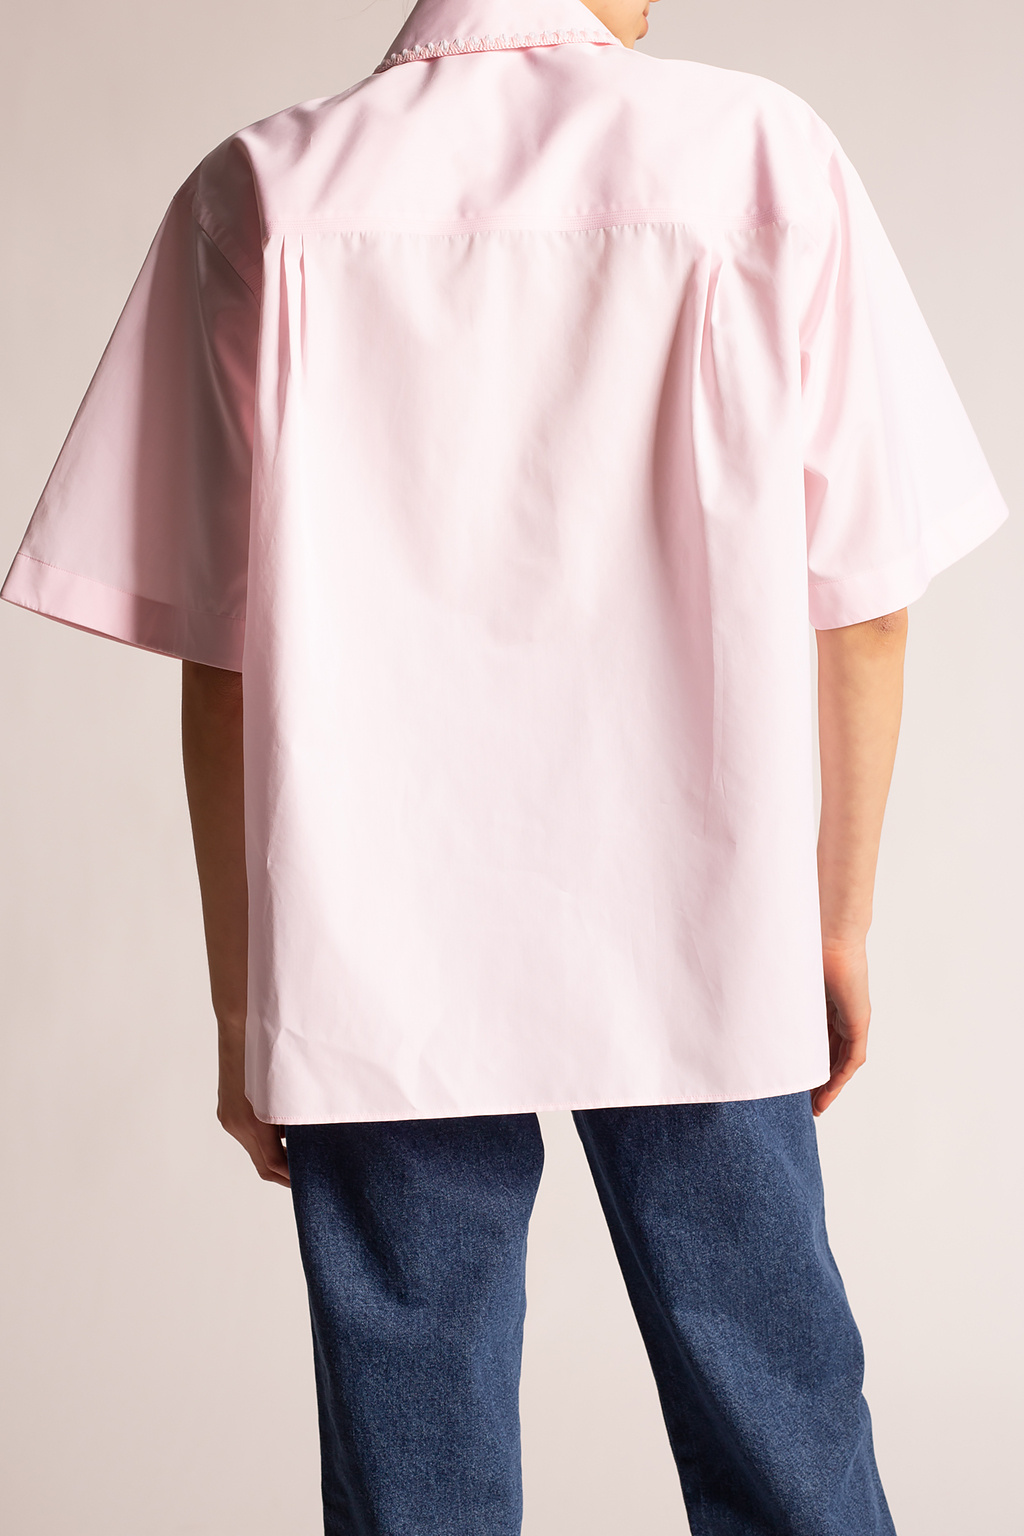 Loewe Short-sleeved shirt